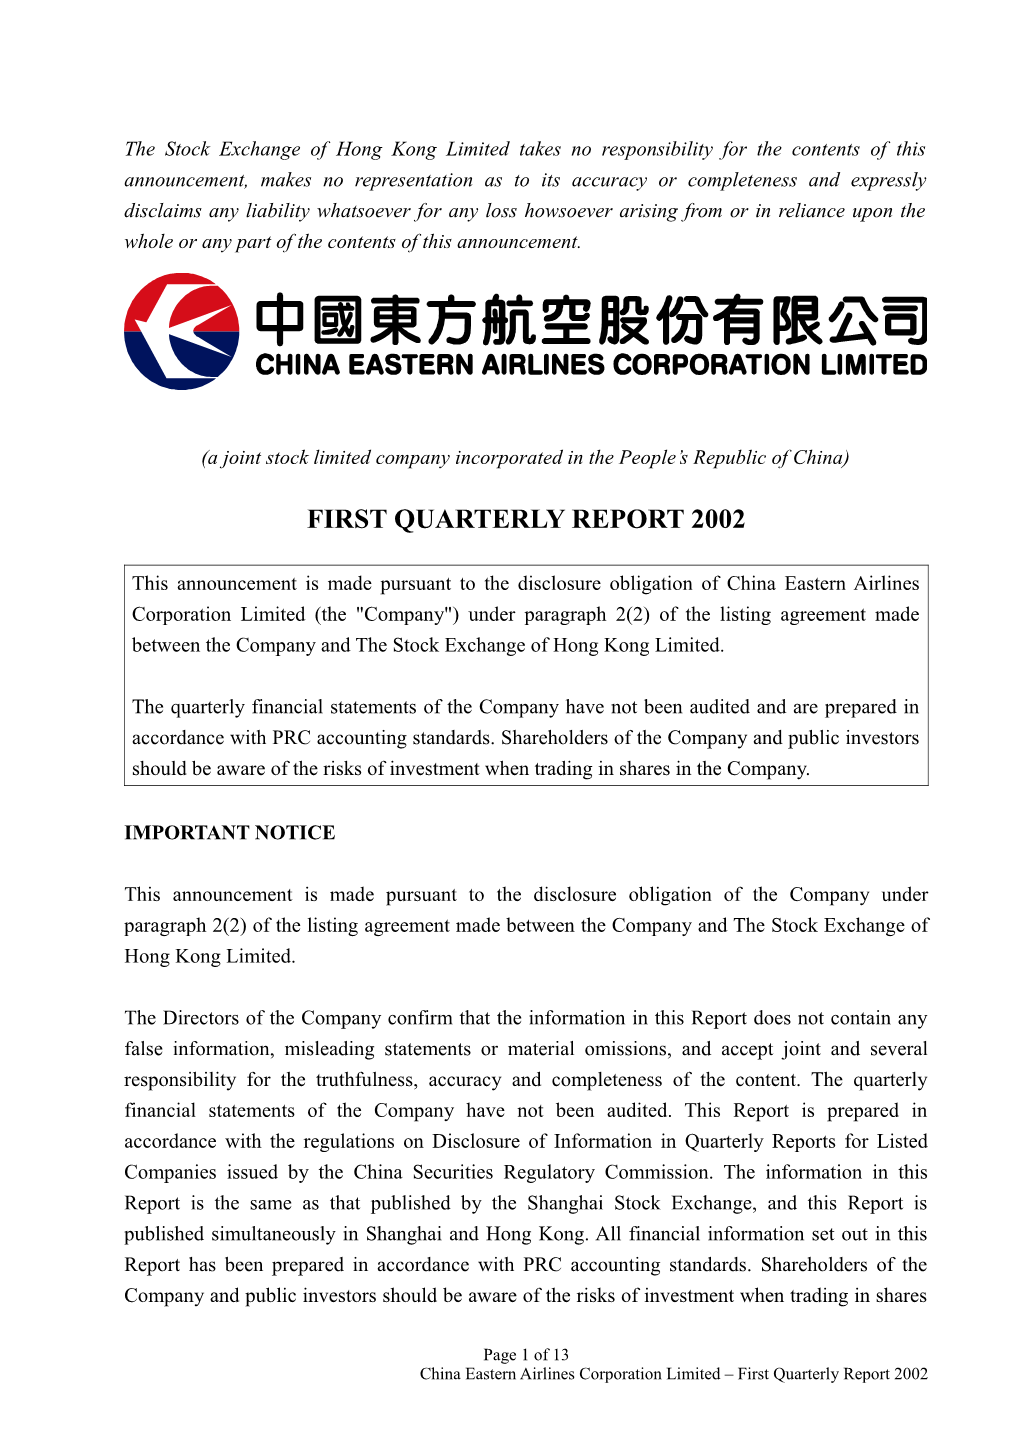 CHINA EAST AIR 00670 - Announcement